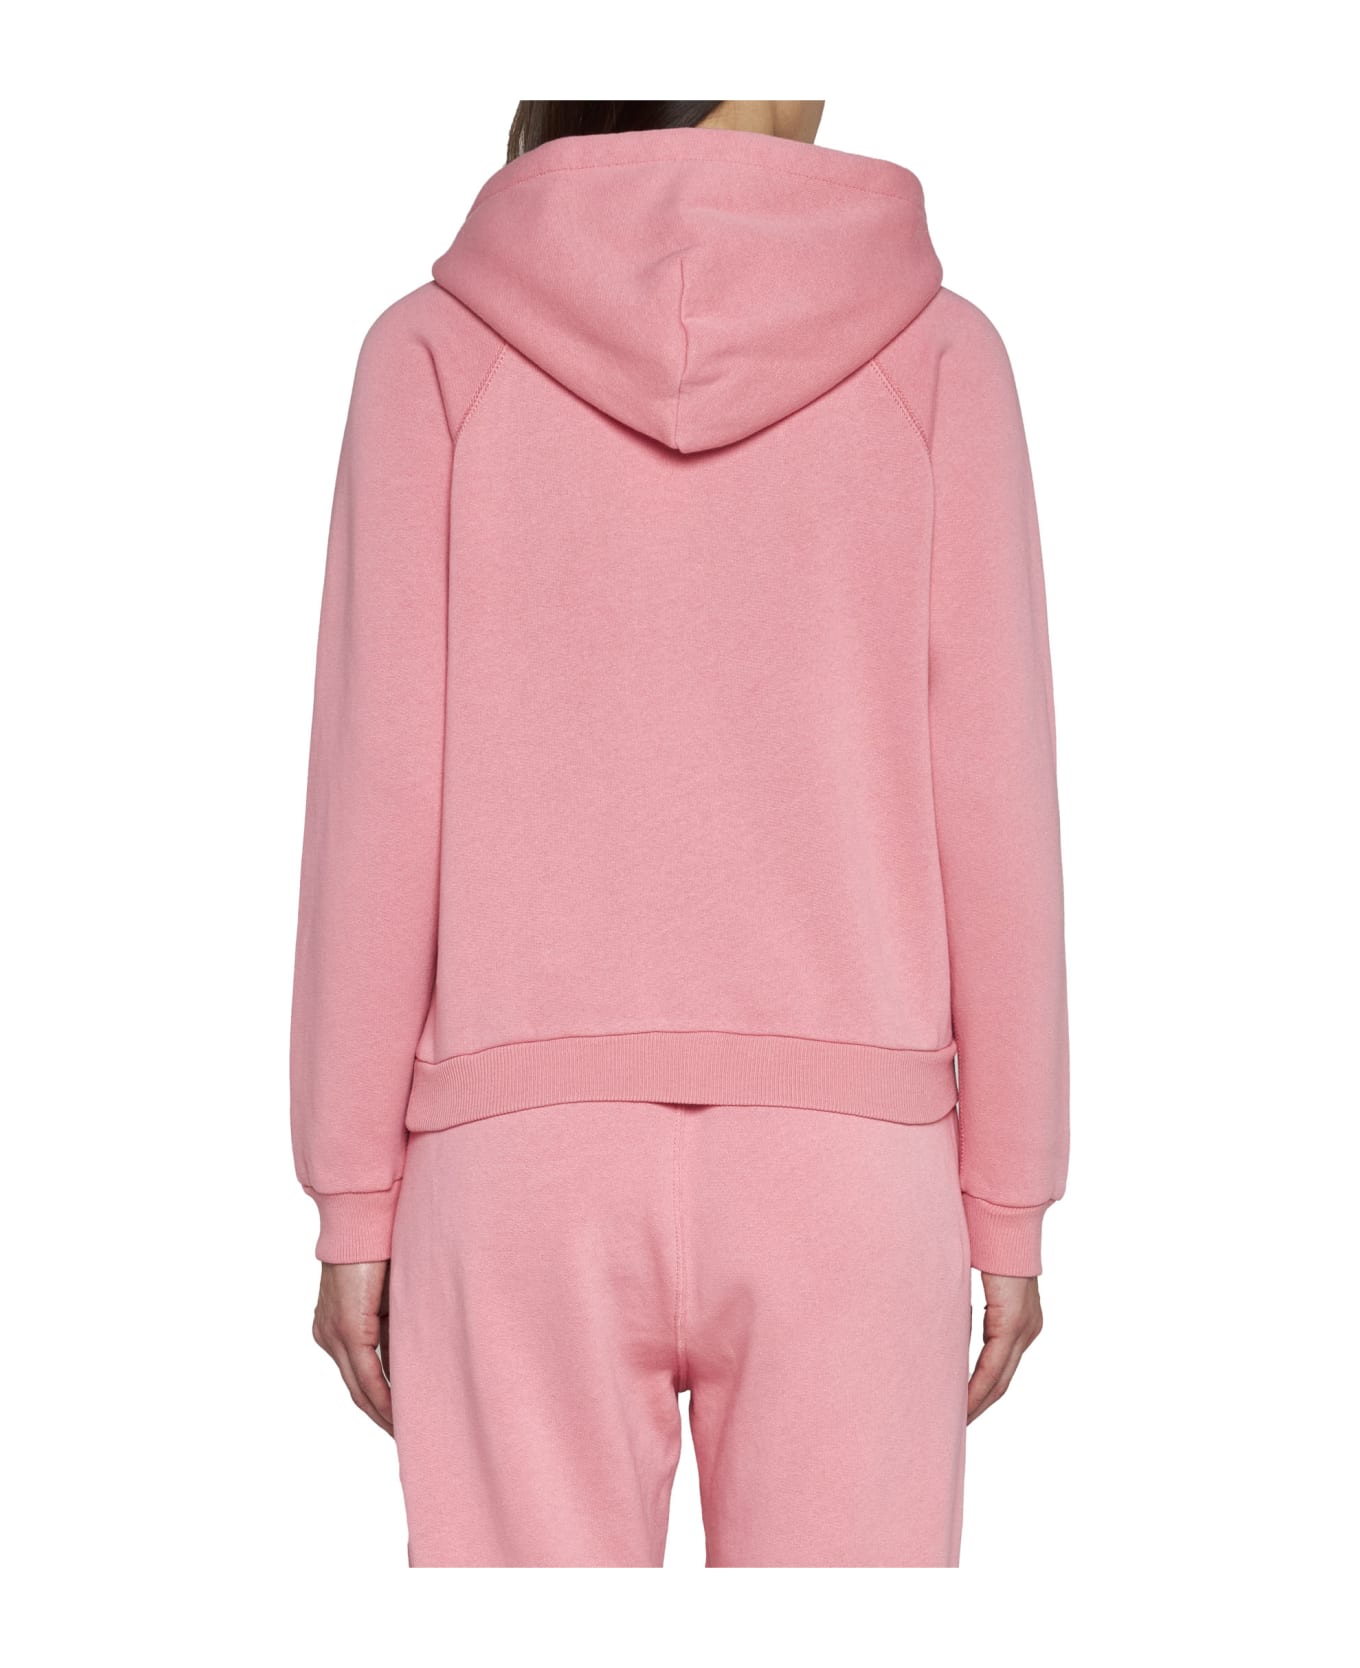 Polo Ralph Lauren Fleece - Dolce pink